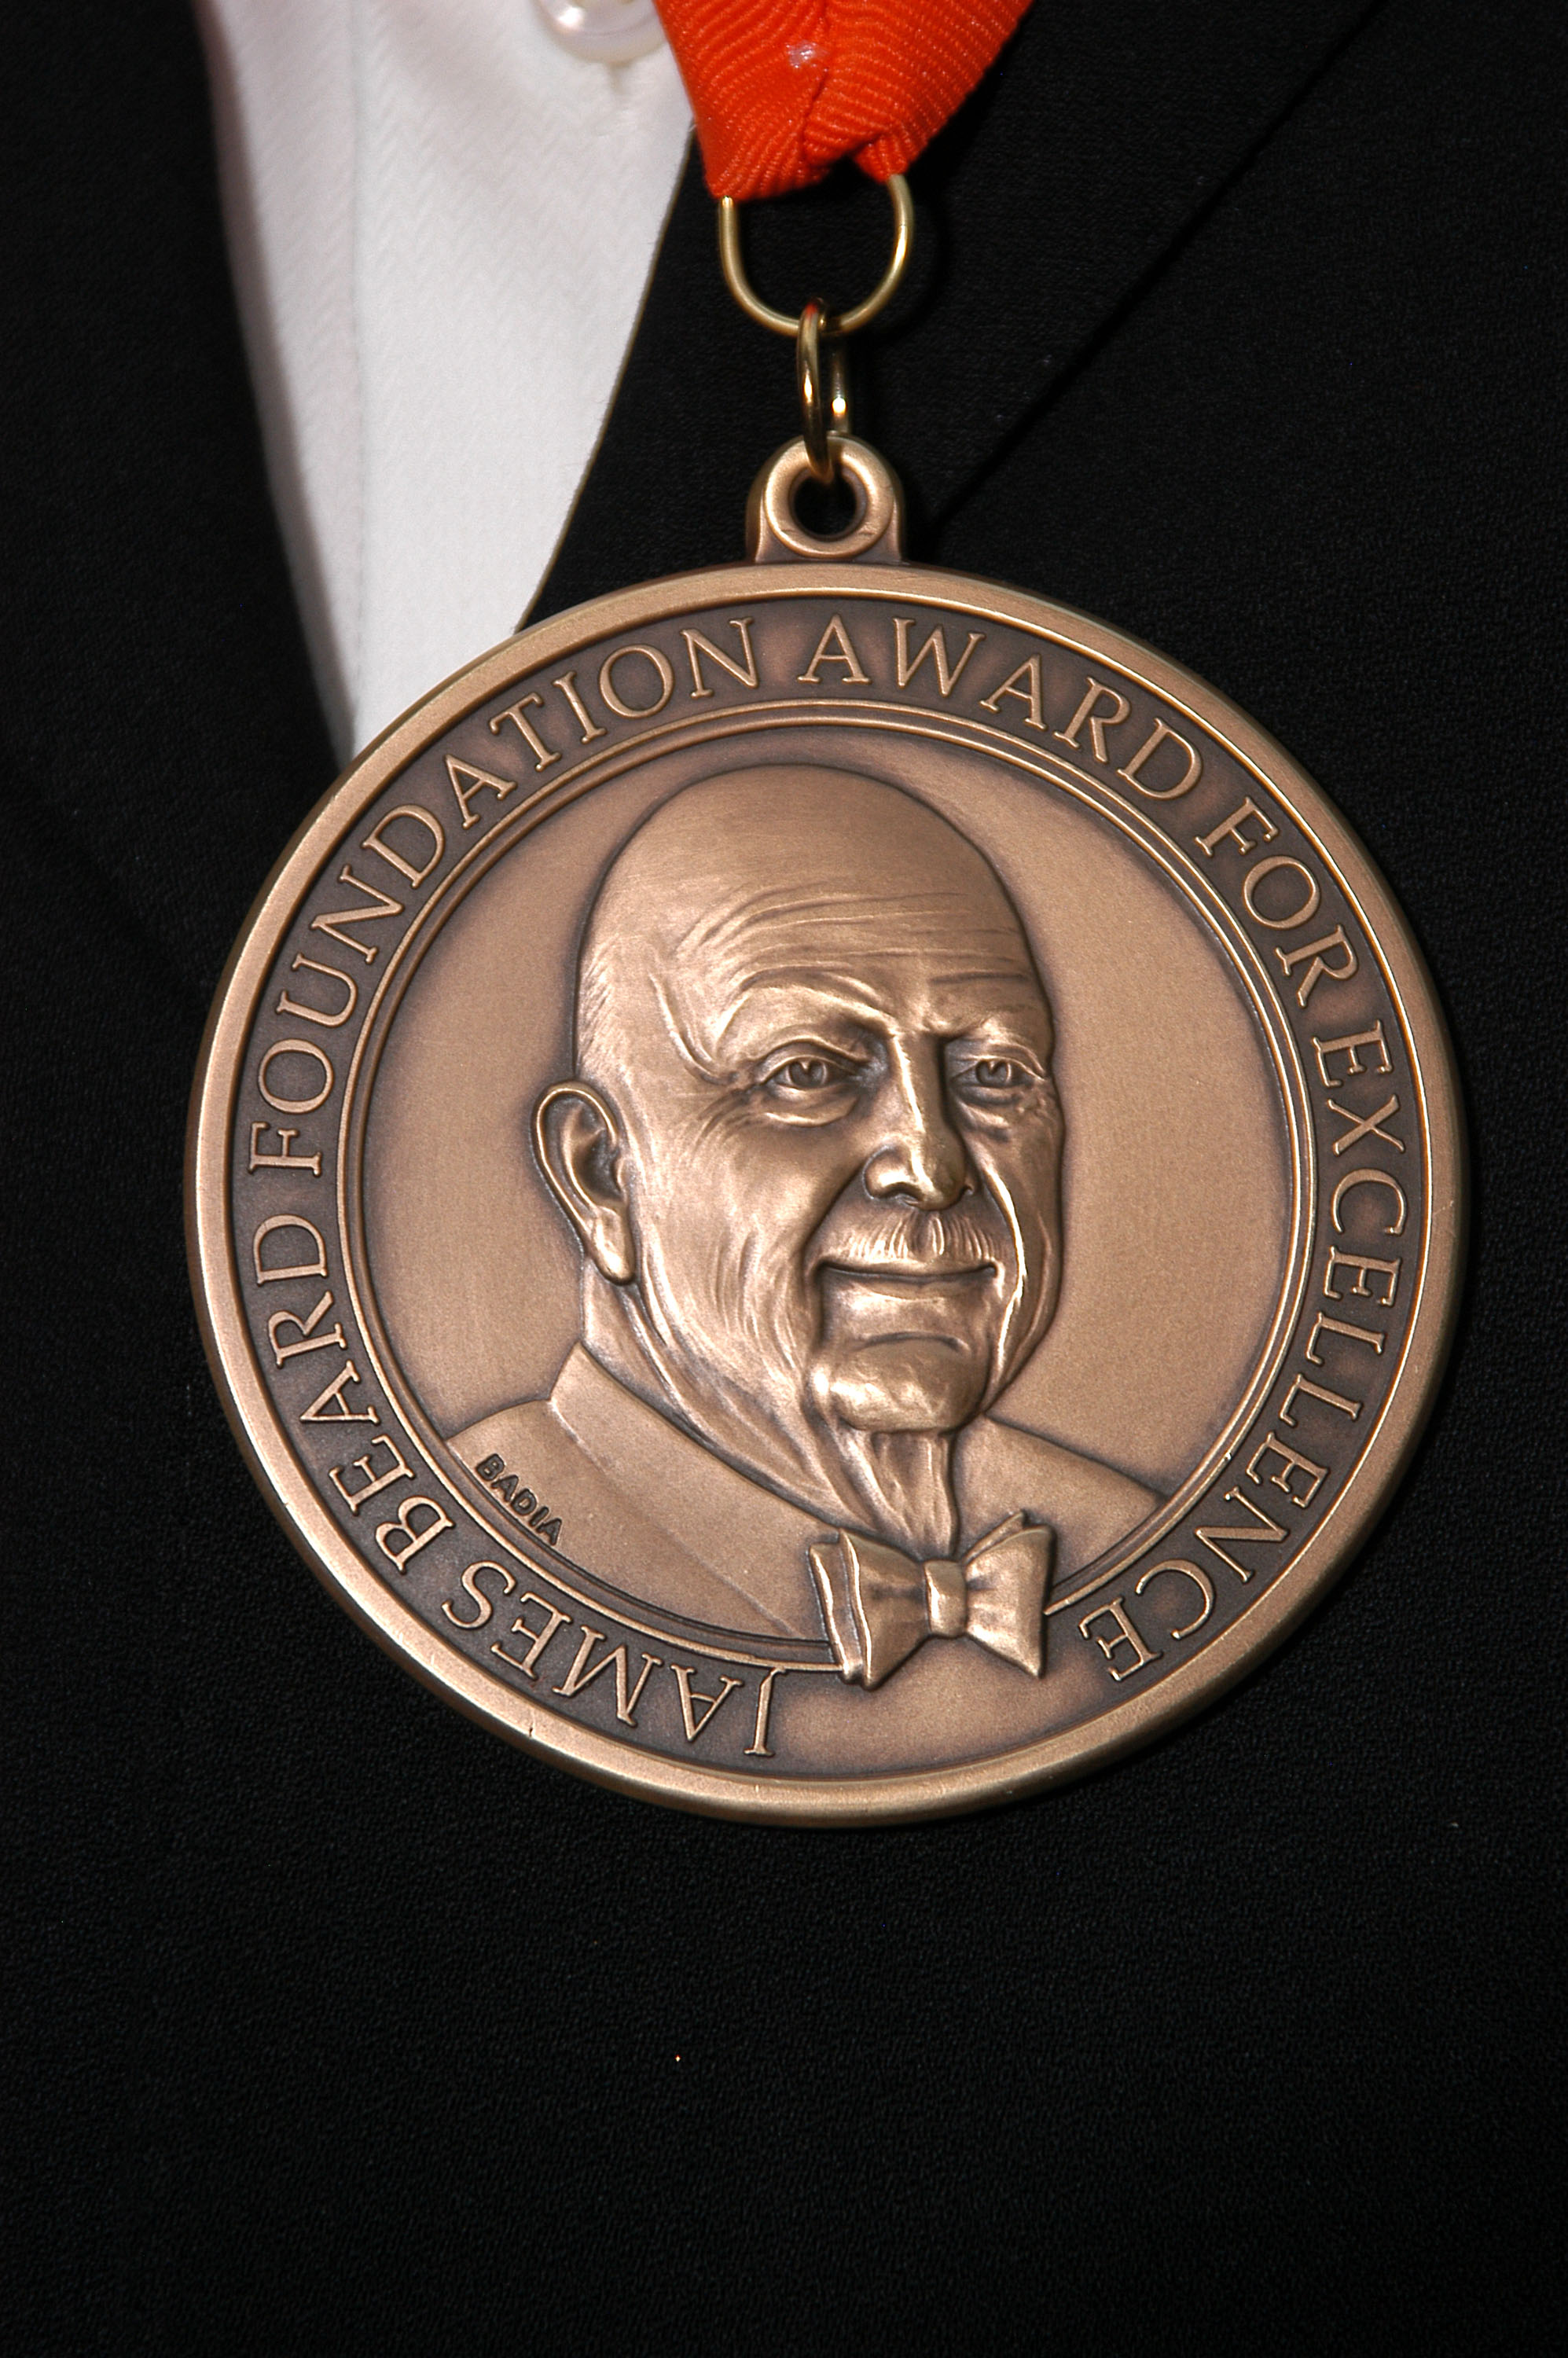 A medal from the James Beard Award